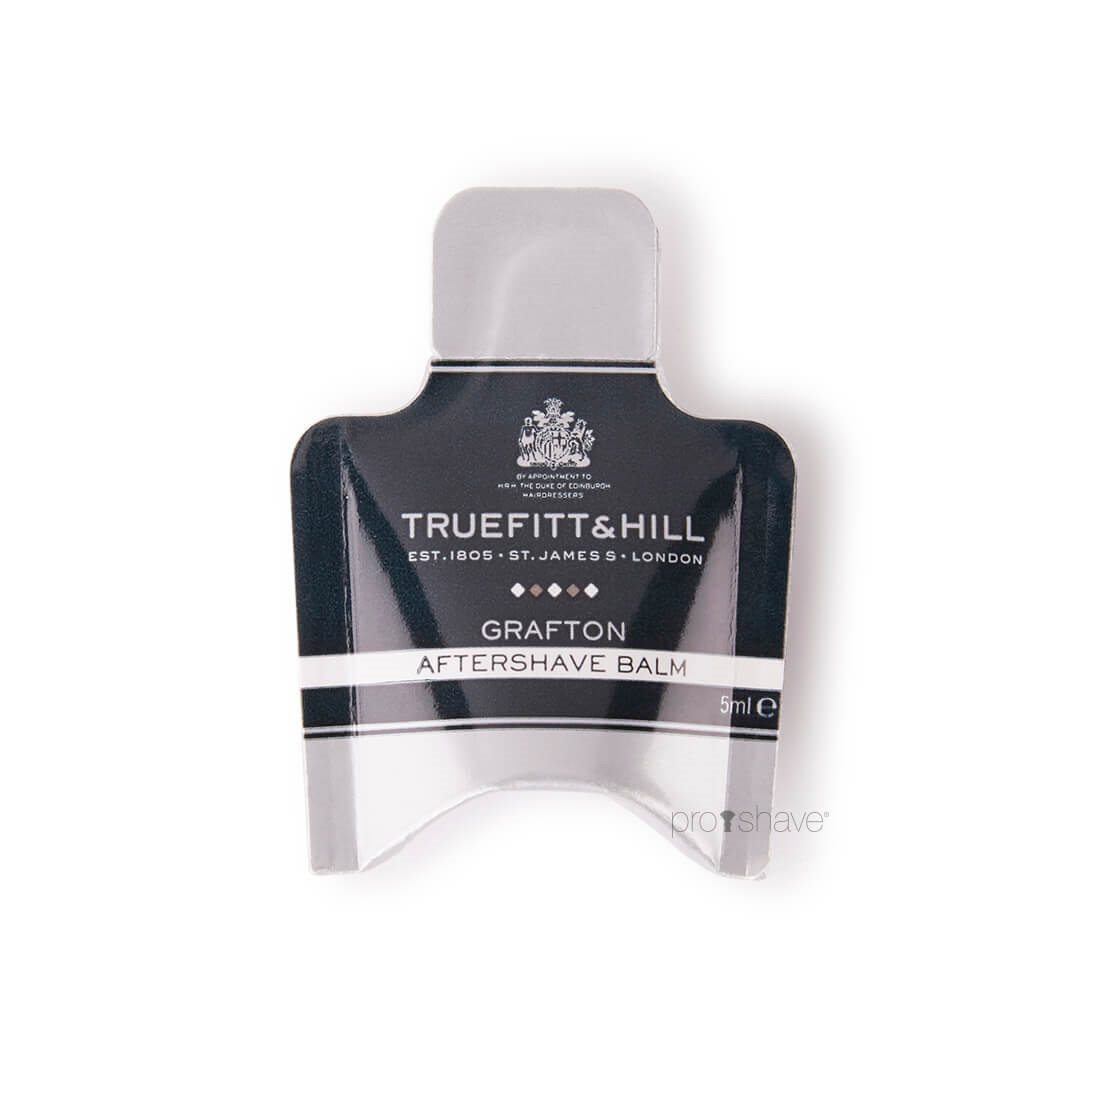 Truefitt & Hill Grafton Aftershave Balm Sample Pack, 5 ml.